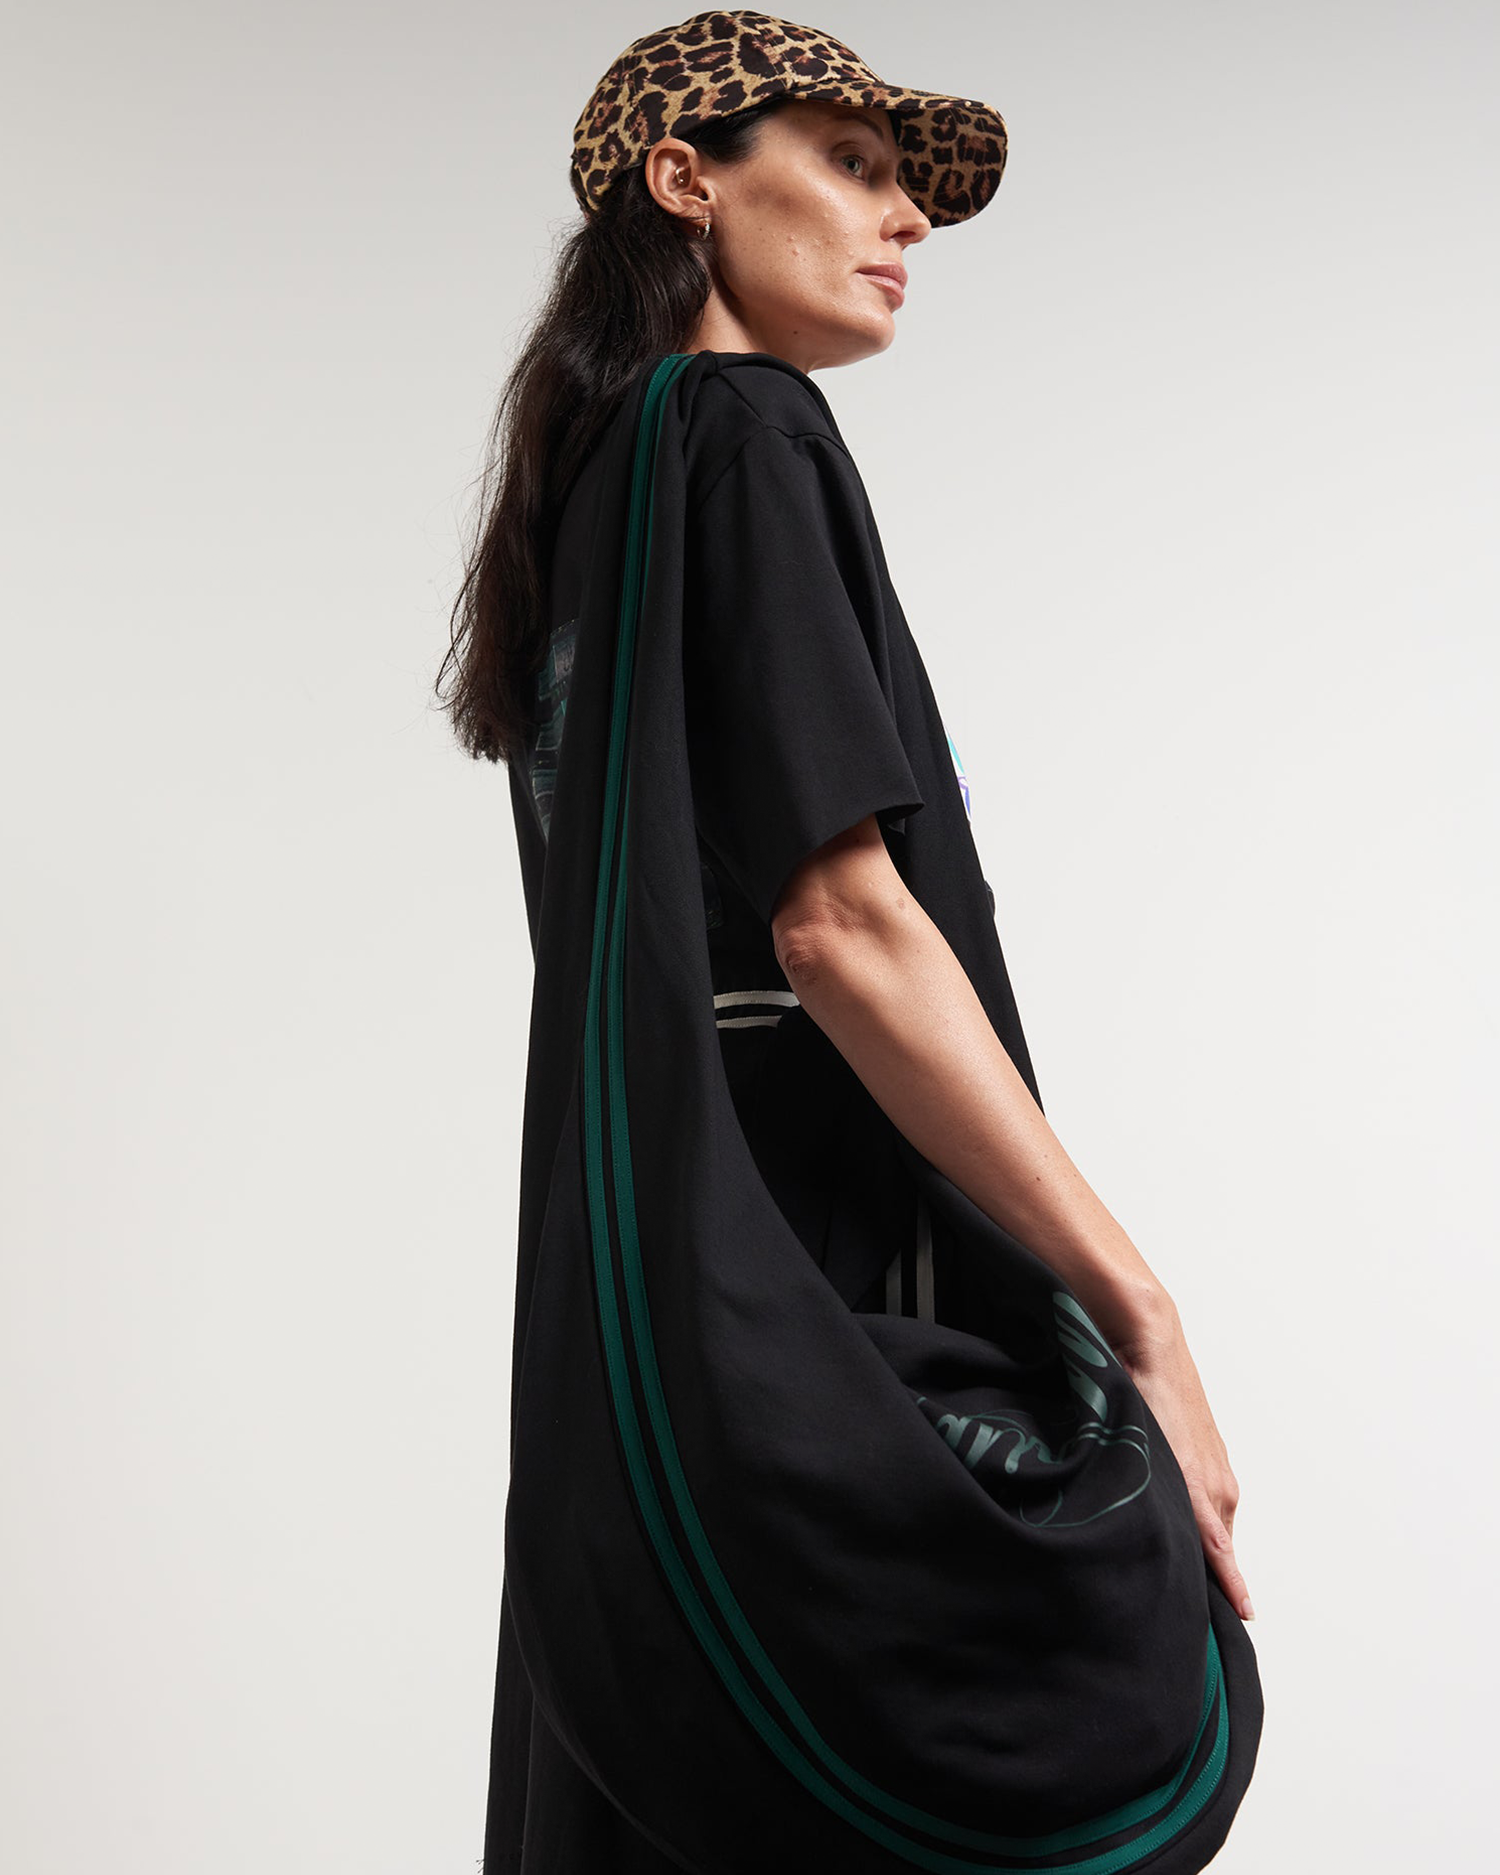 Maria Sweater Bag - Black / Green